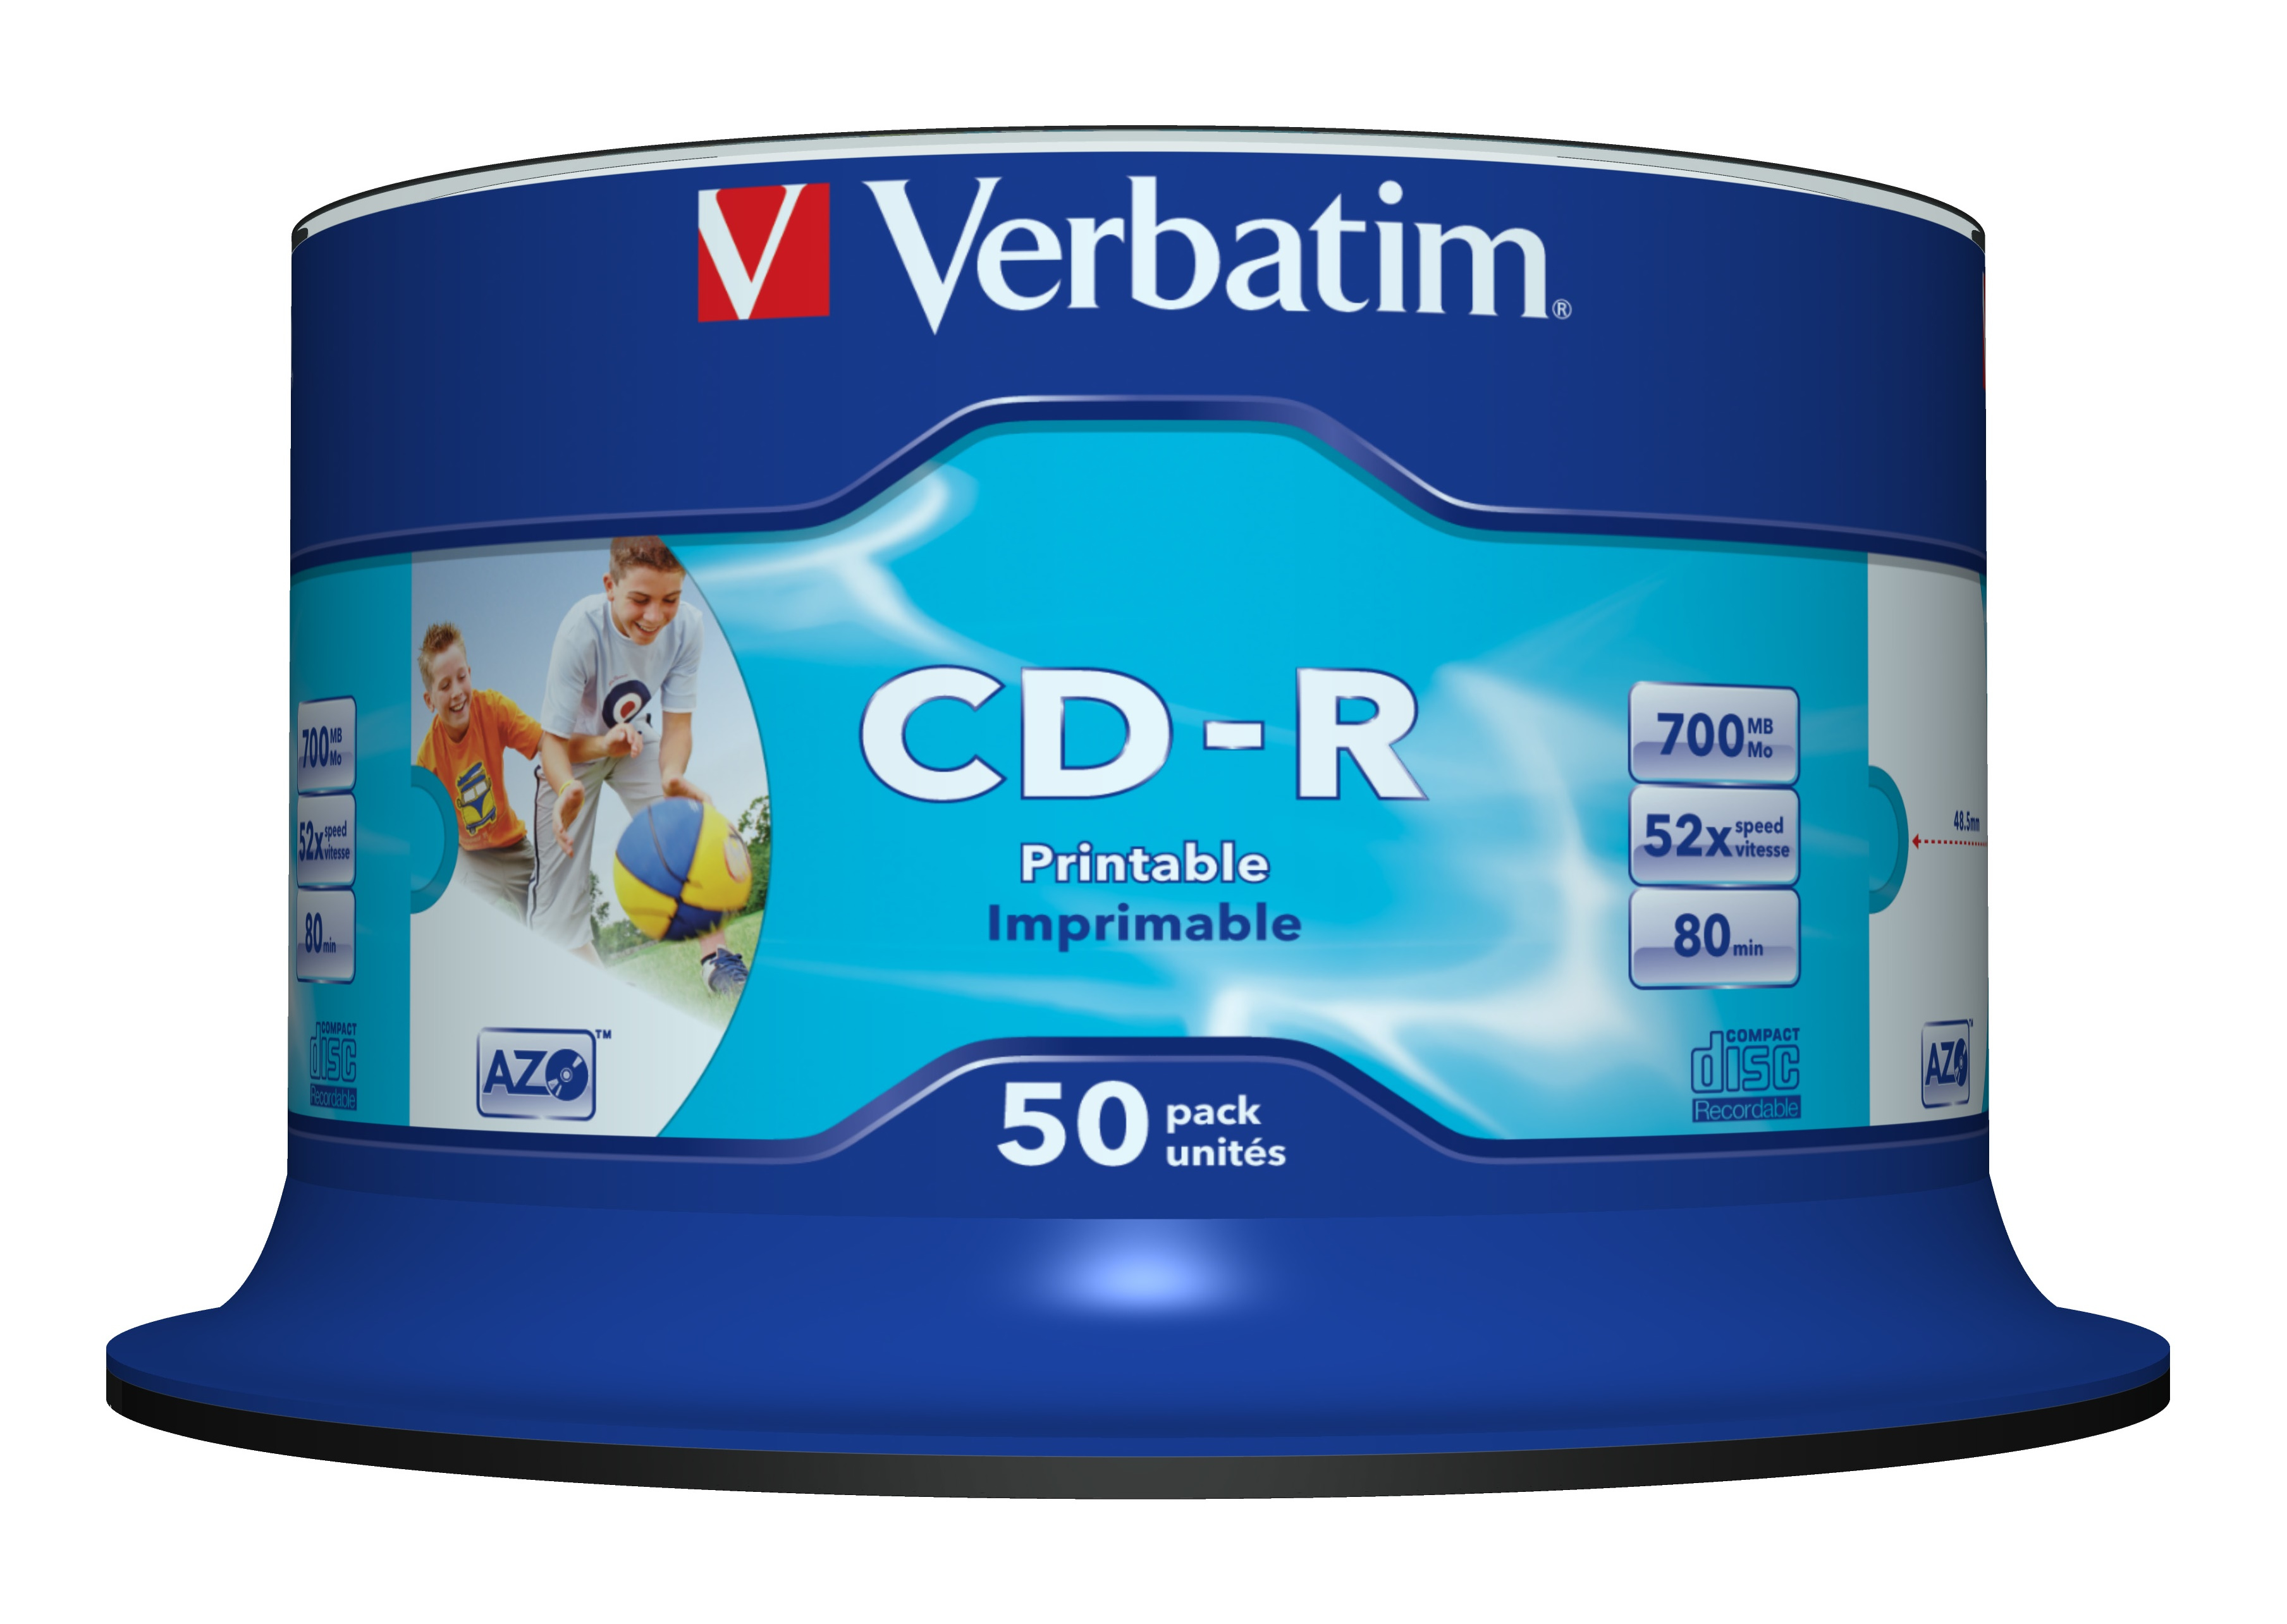 CD-R Verbatim 700MB 50pcs Pack 52x Spindel azo wide printab retail